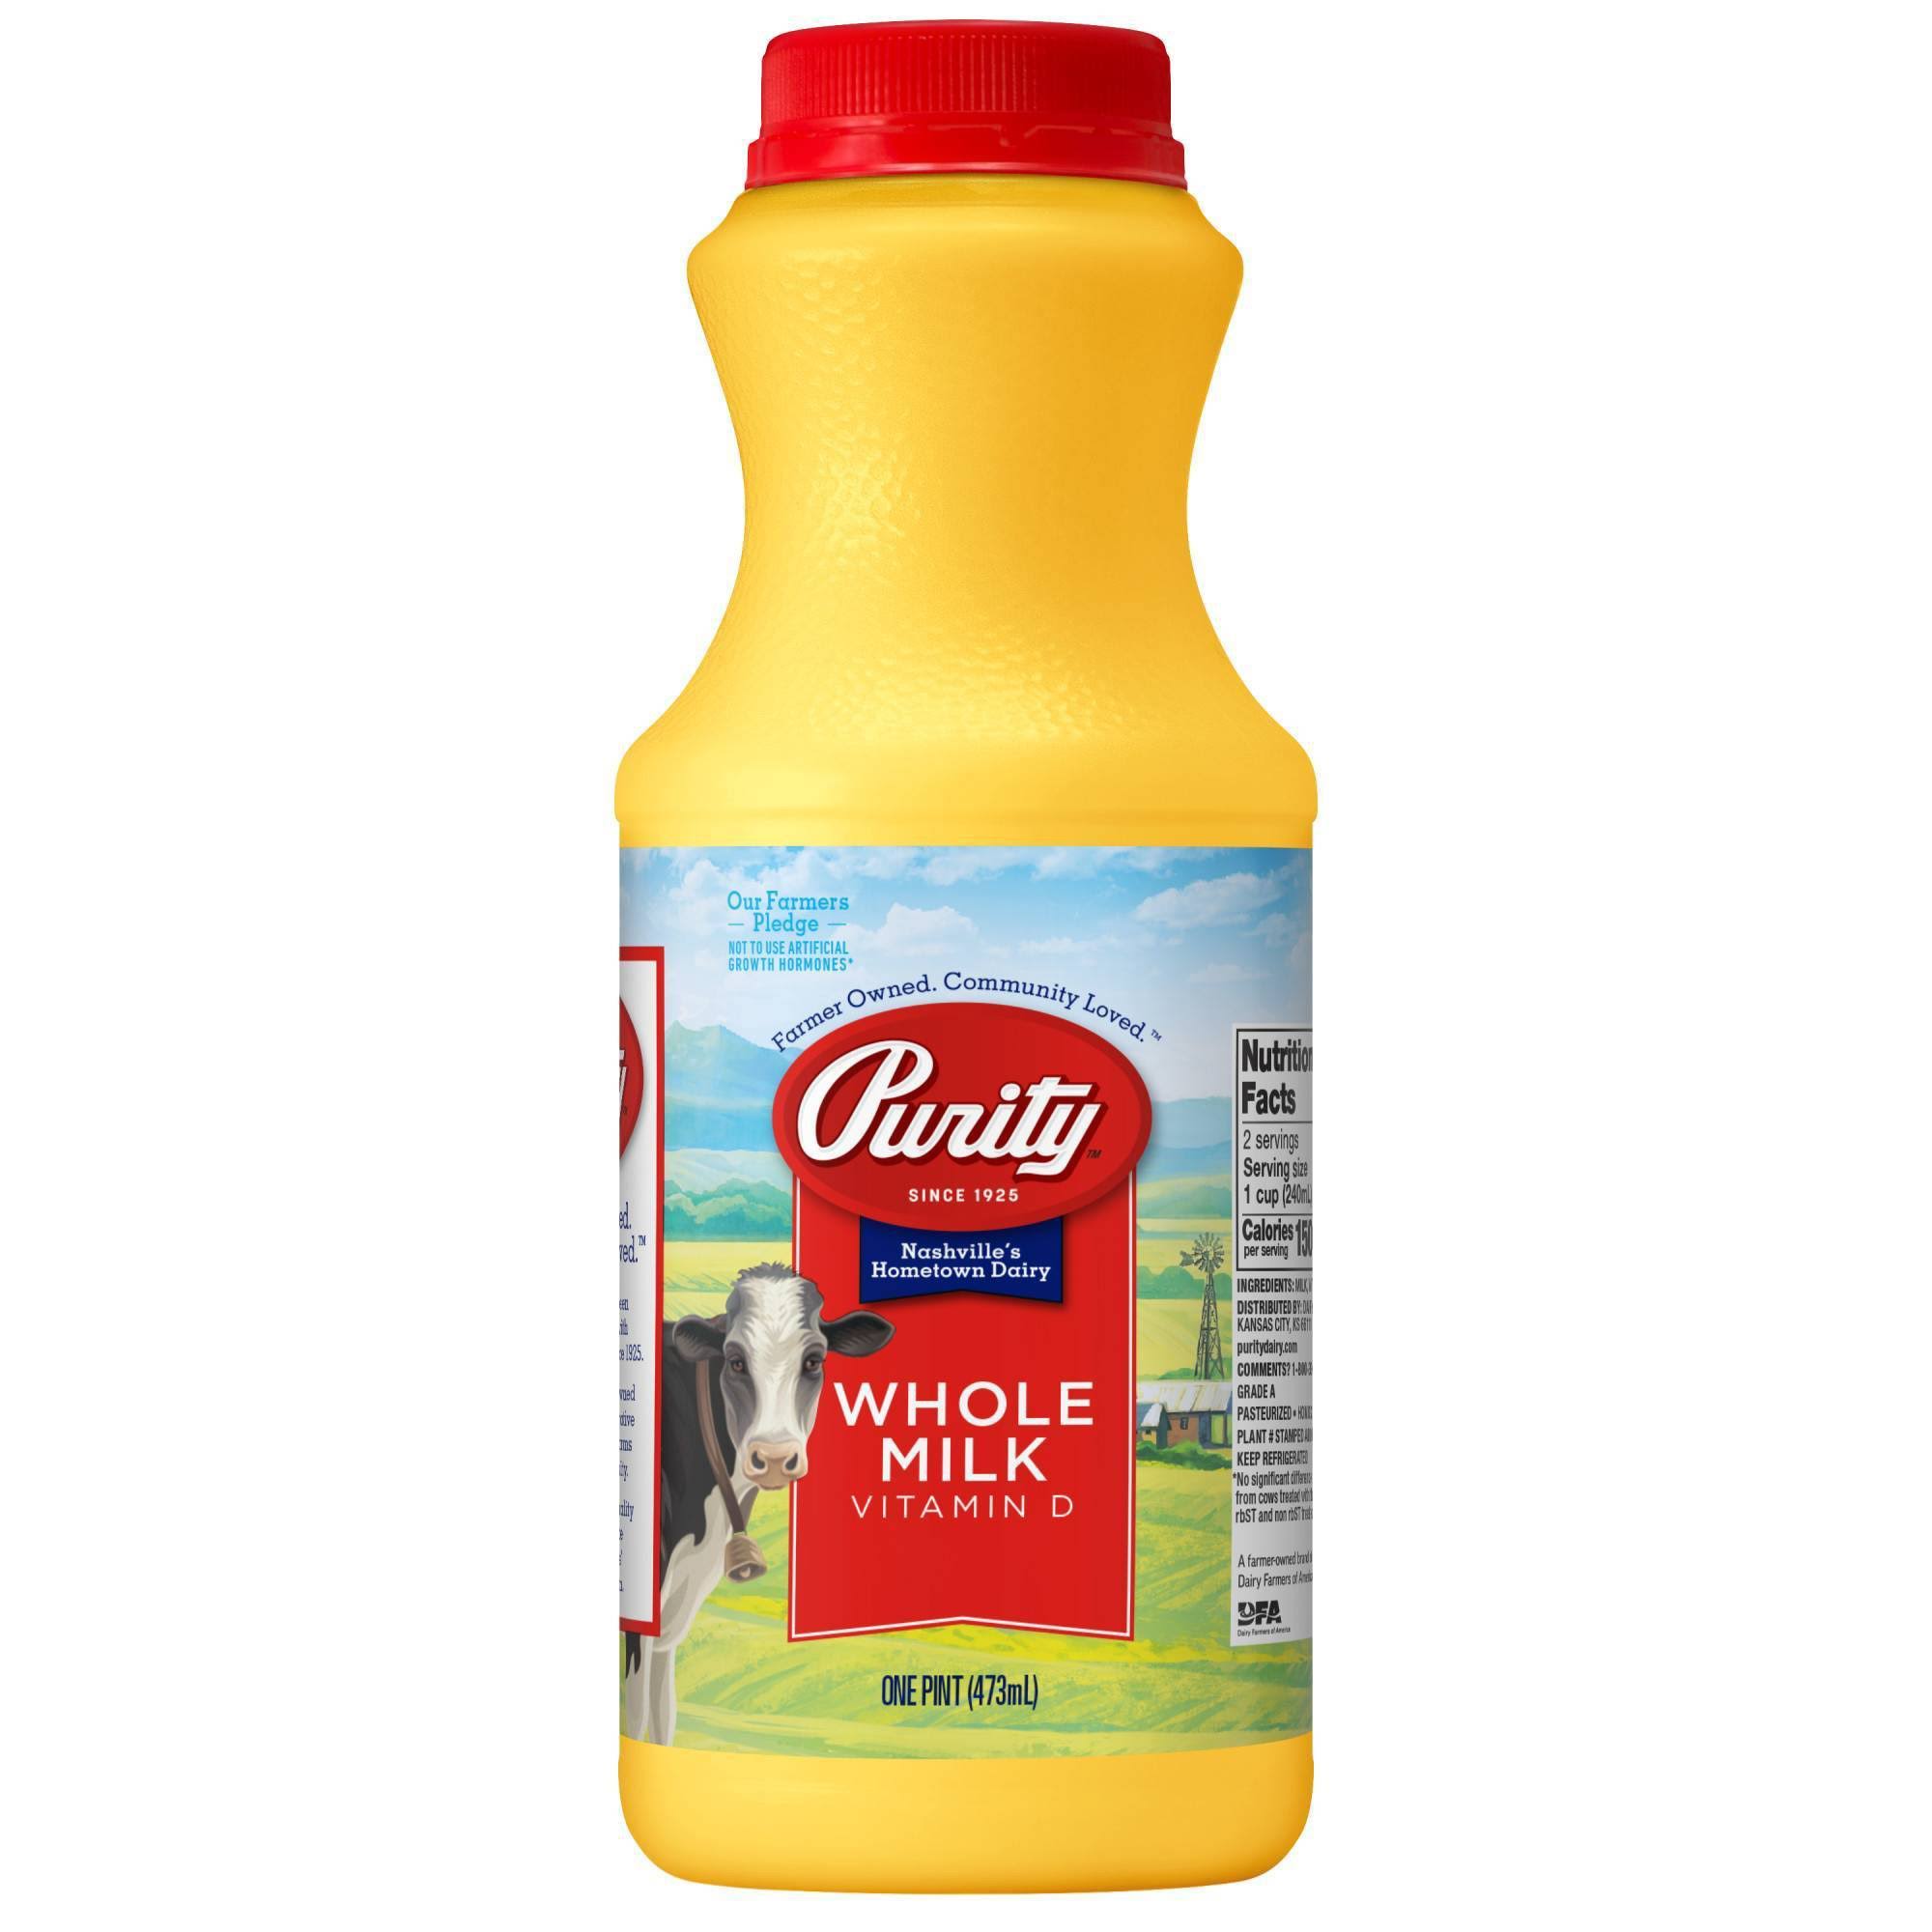 Purity Milk, Vitamin D - 1 pt